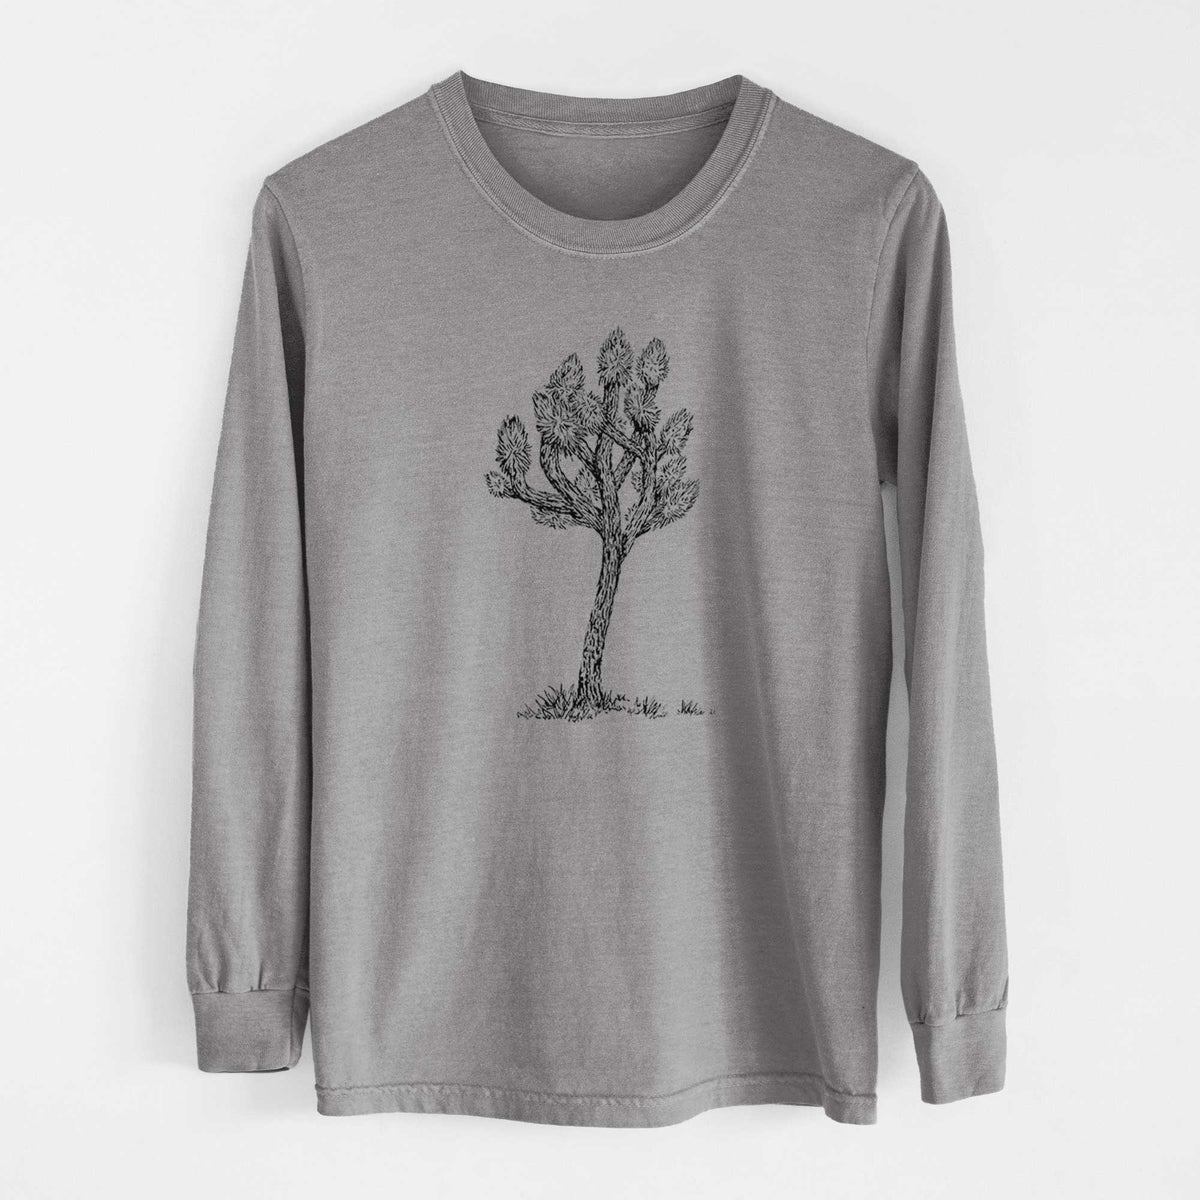 Yucca brevifolia - Joshua Tree - Heavyweight 100% Cotton Long Sleeve